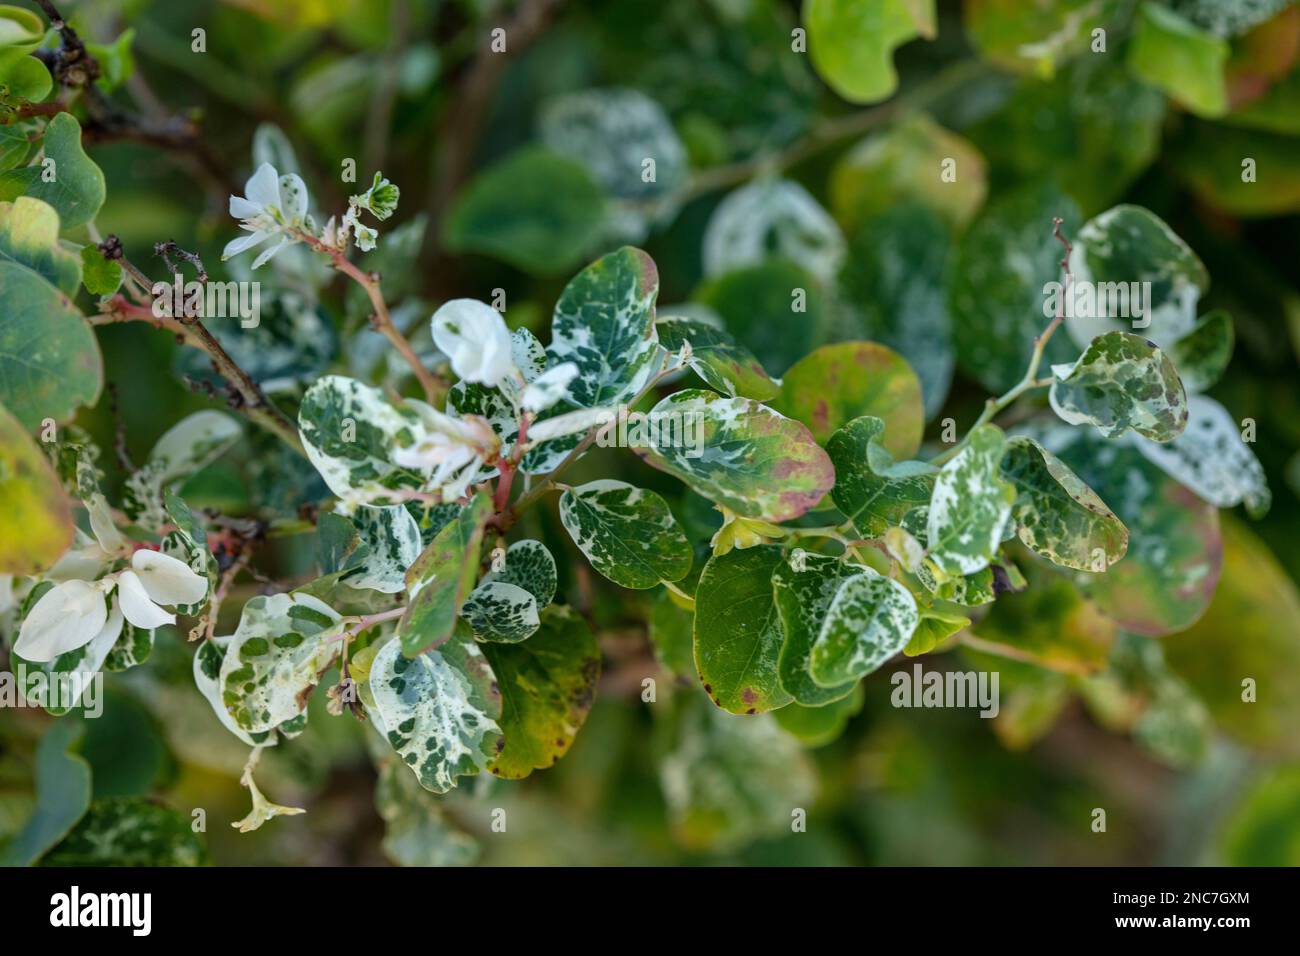 Natural close up plant portrait of Breynia Disticha, Phyllanthaceae, snow bush. Teneˈɾife; Teneriffe, Canary Islands, Spain,  tourism, winter sunshine Stock Photo